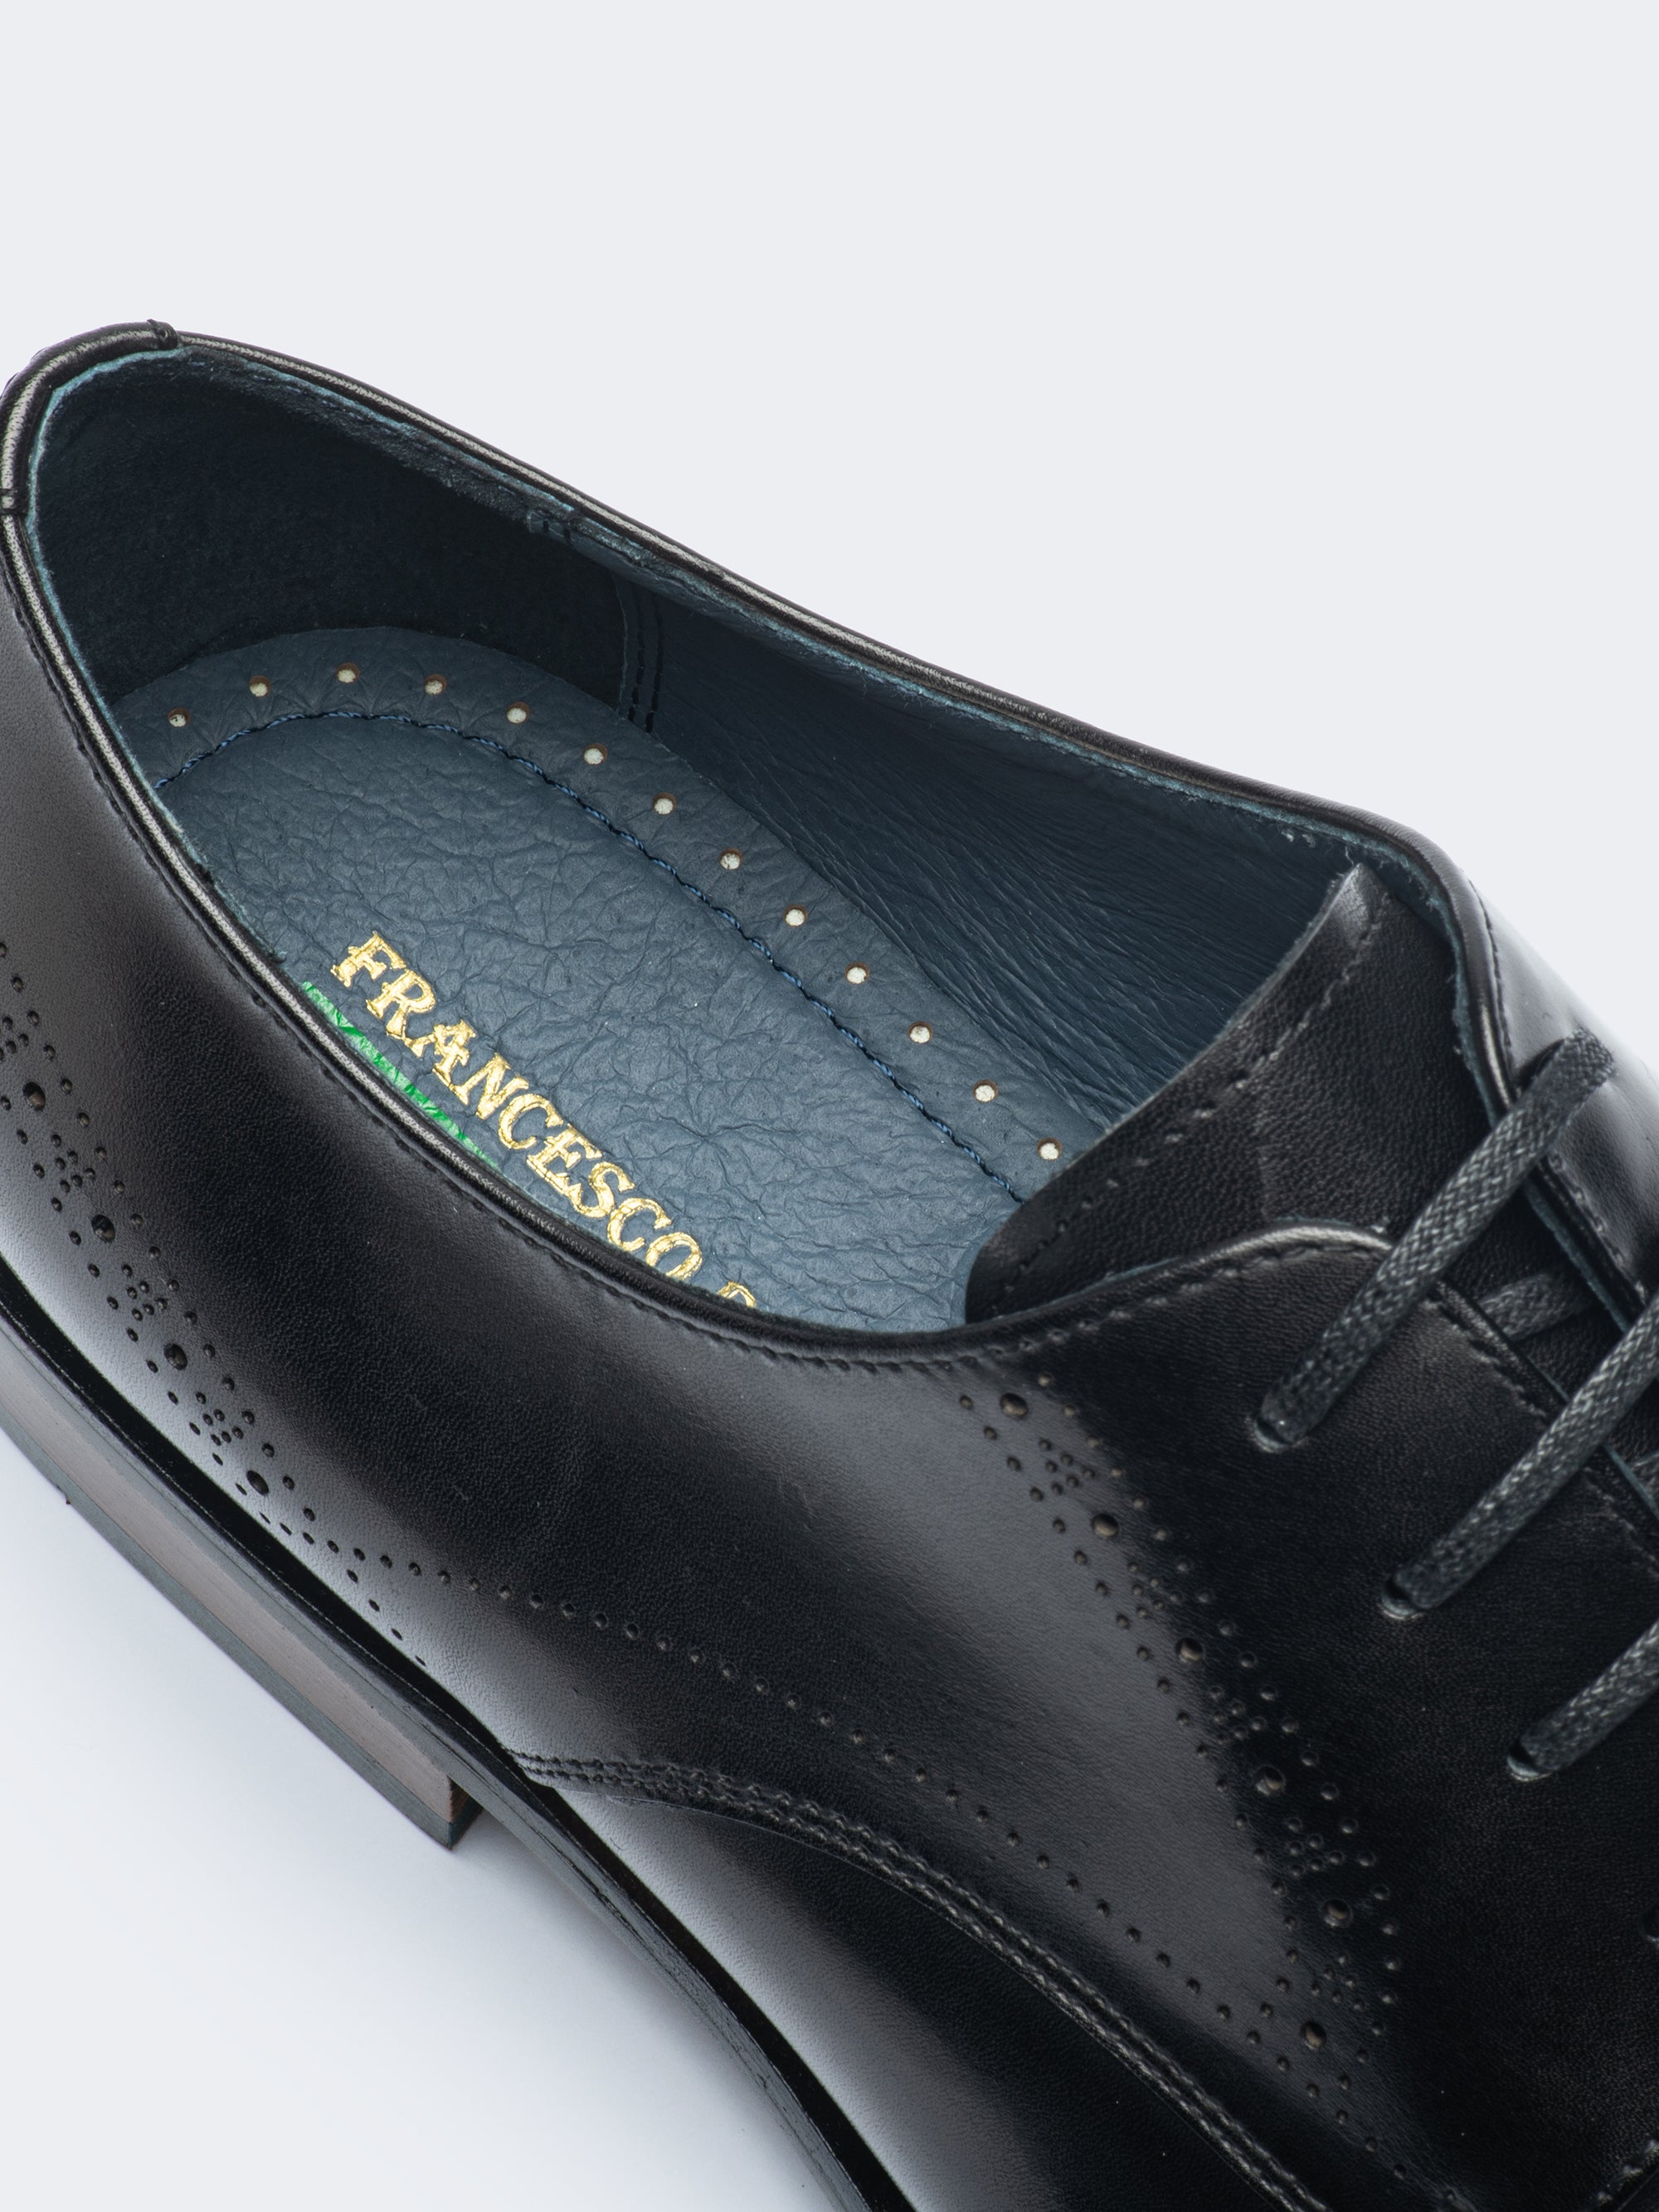 Black - Wingtip Shoe